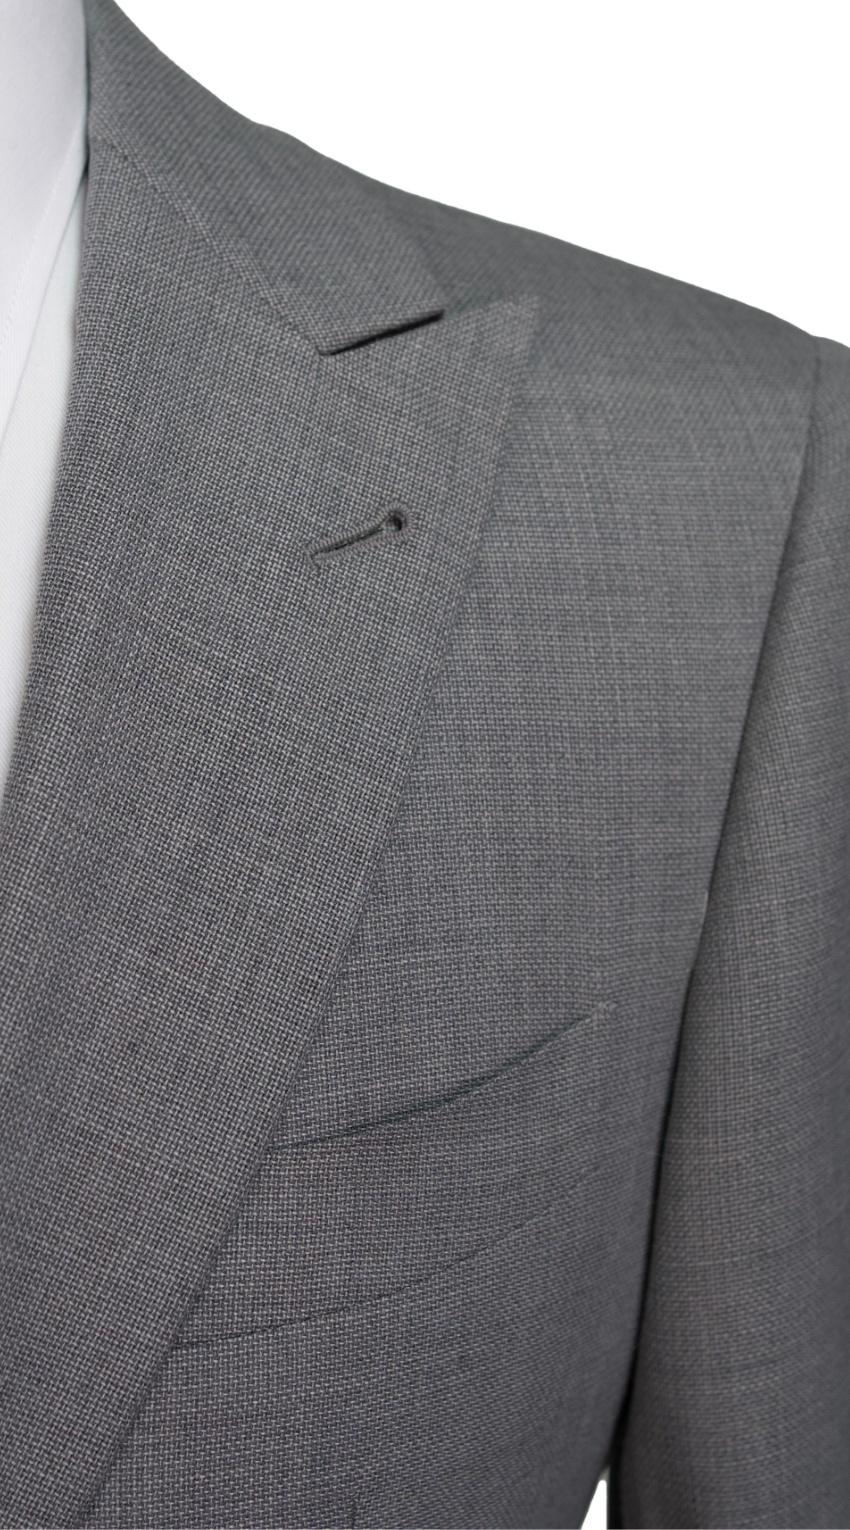 Metallic Gray Plain Weave Suit